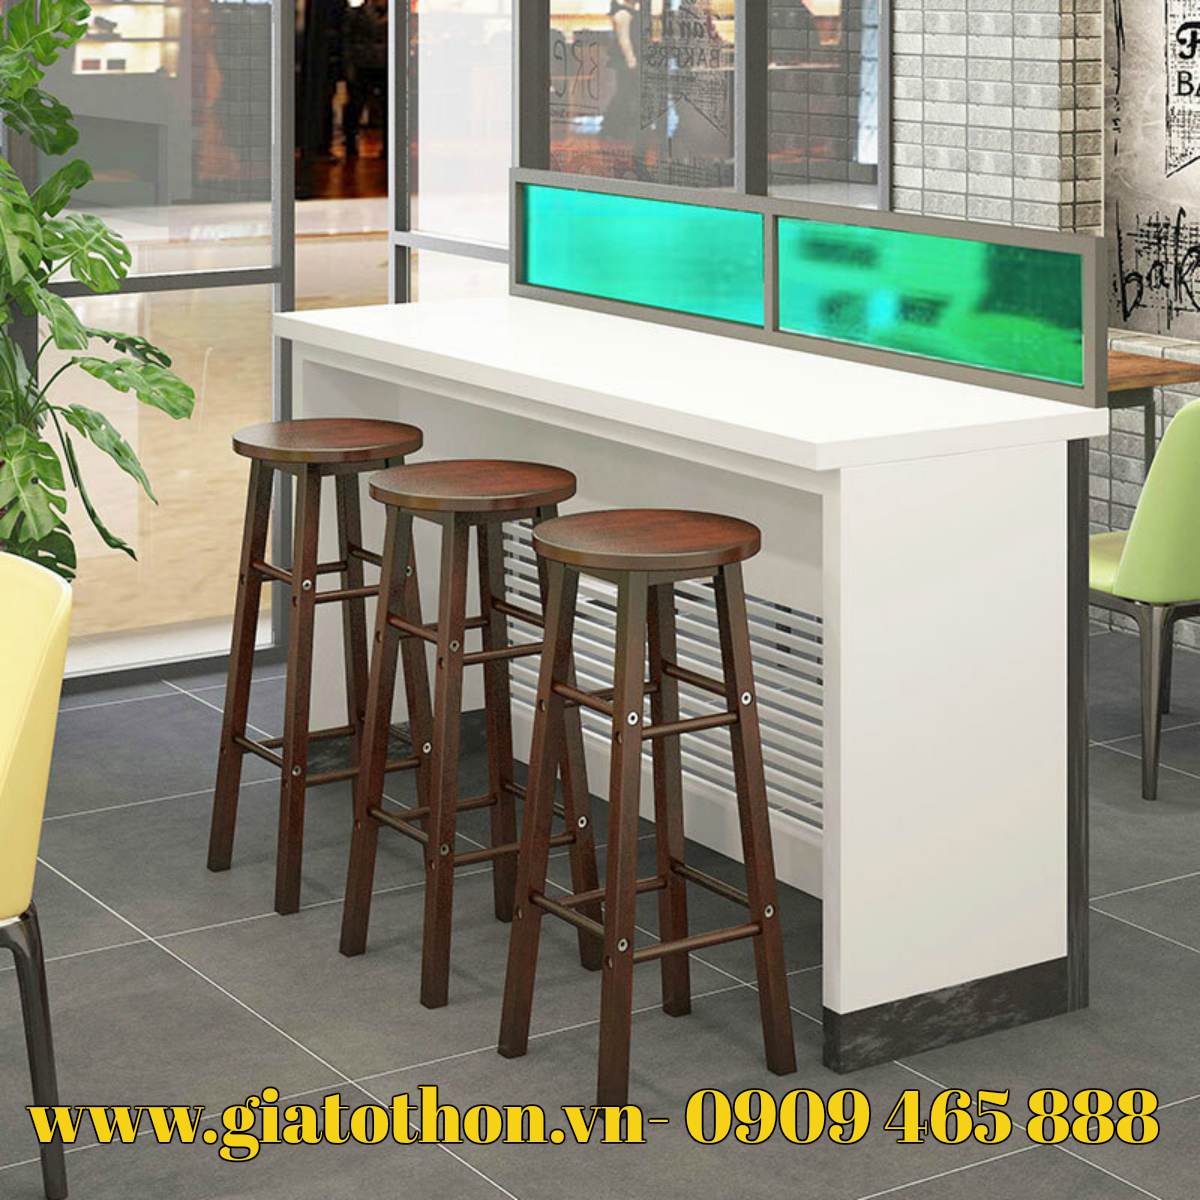 ghế gỗ quán bar đẹp, ghế bar gỗ hiện đại, ghế bar gỗ hcm, ghế quầy bar chân cao, ghế bar gỗ, ghế bar nhà hàng,